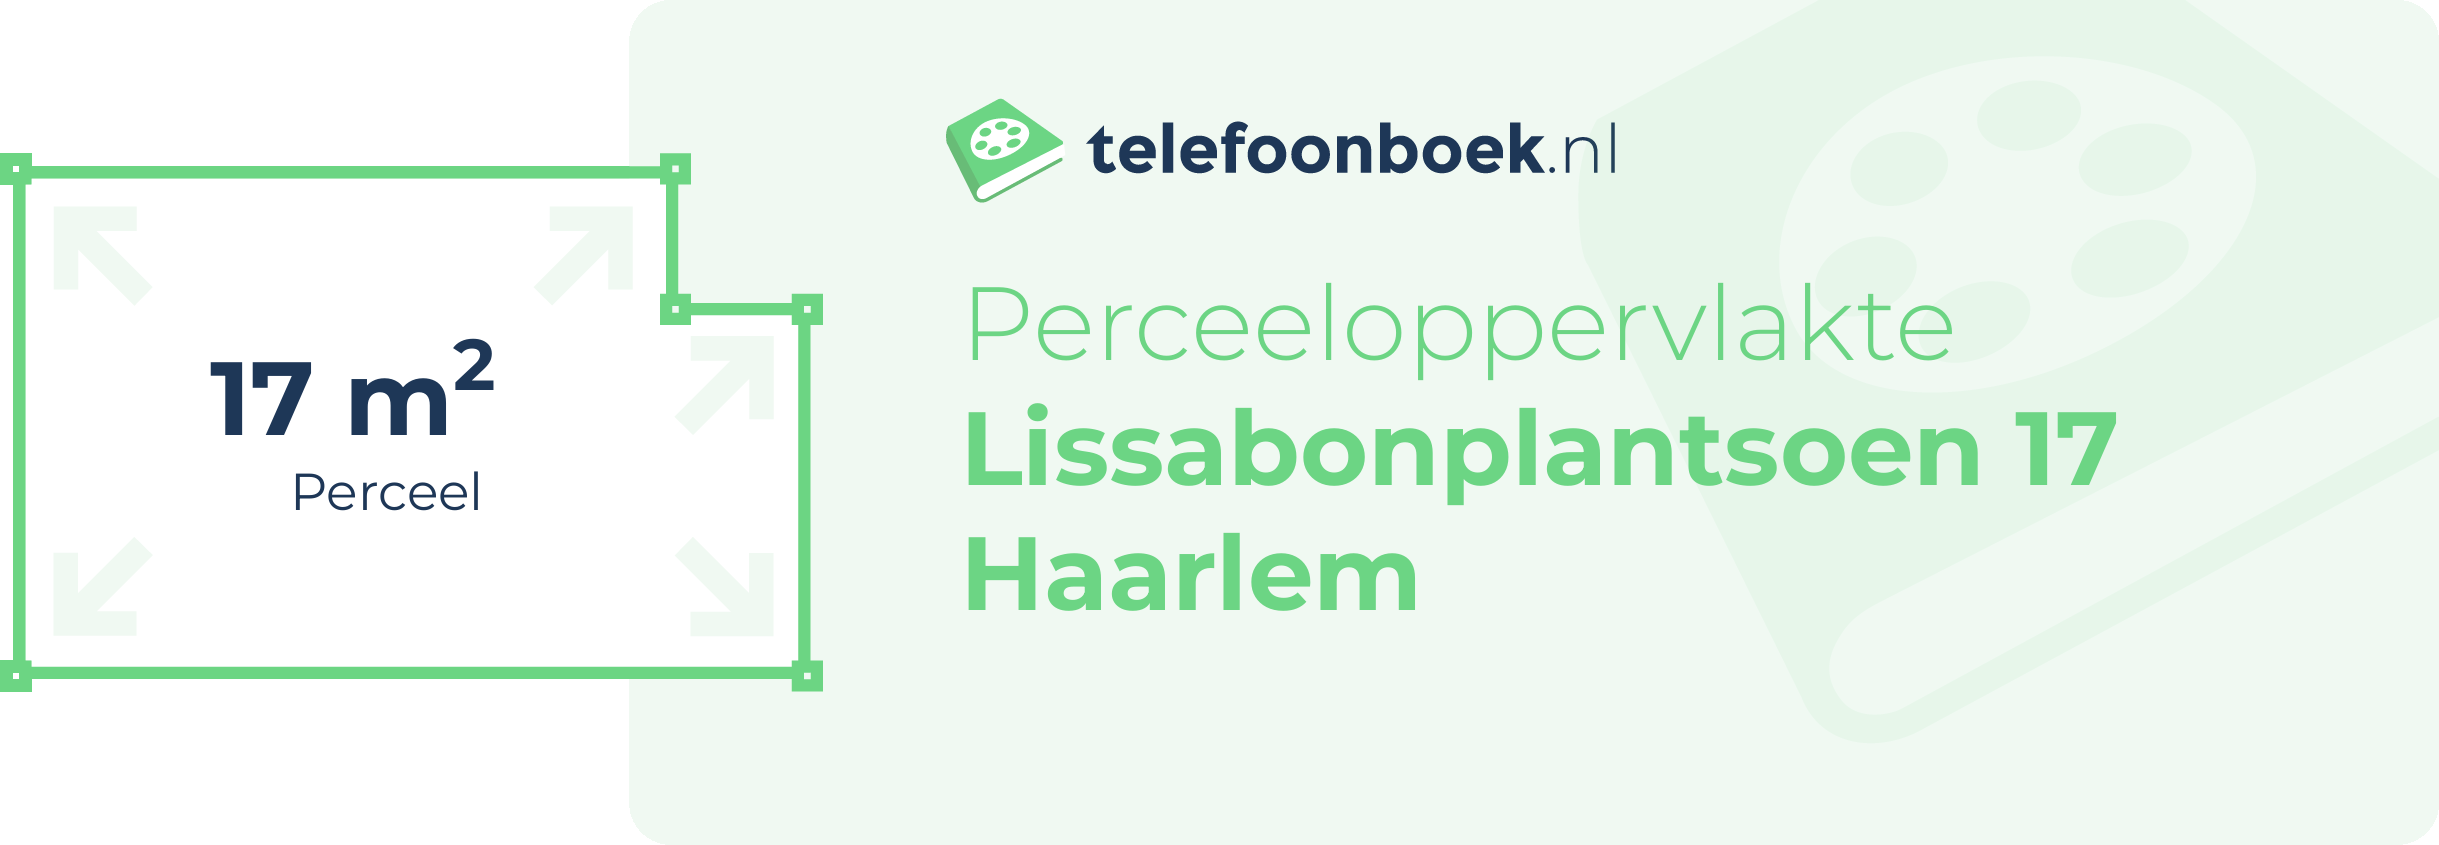 Perceeloppervlakte Lissabonplantsoen 17 Haarlem